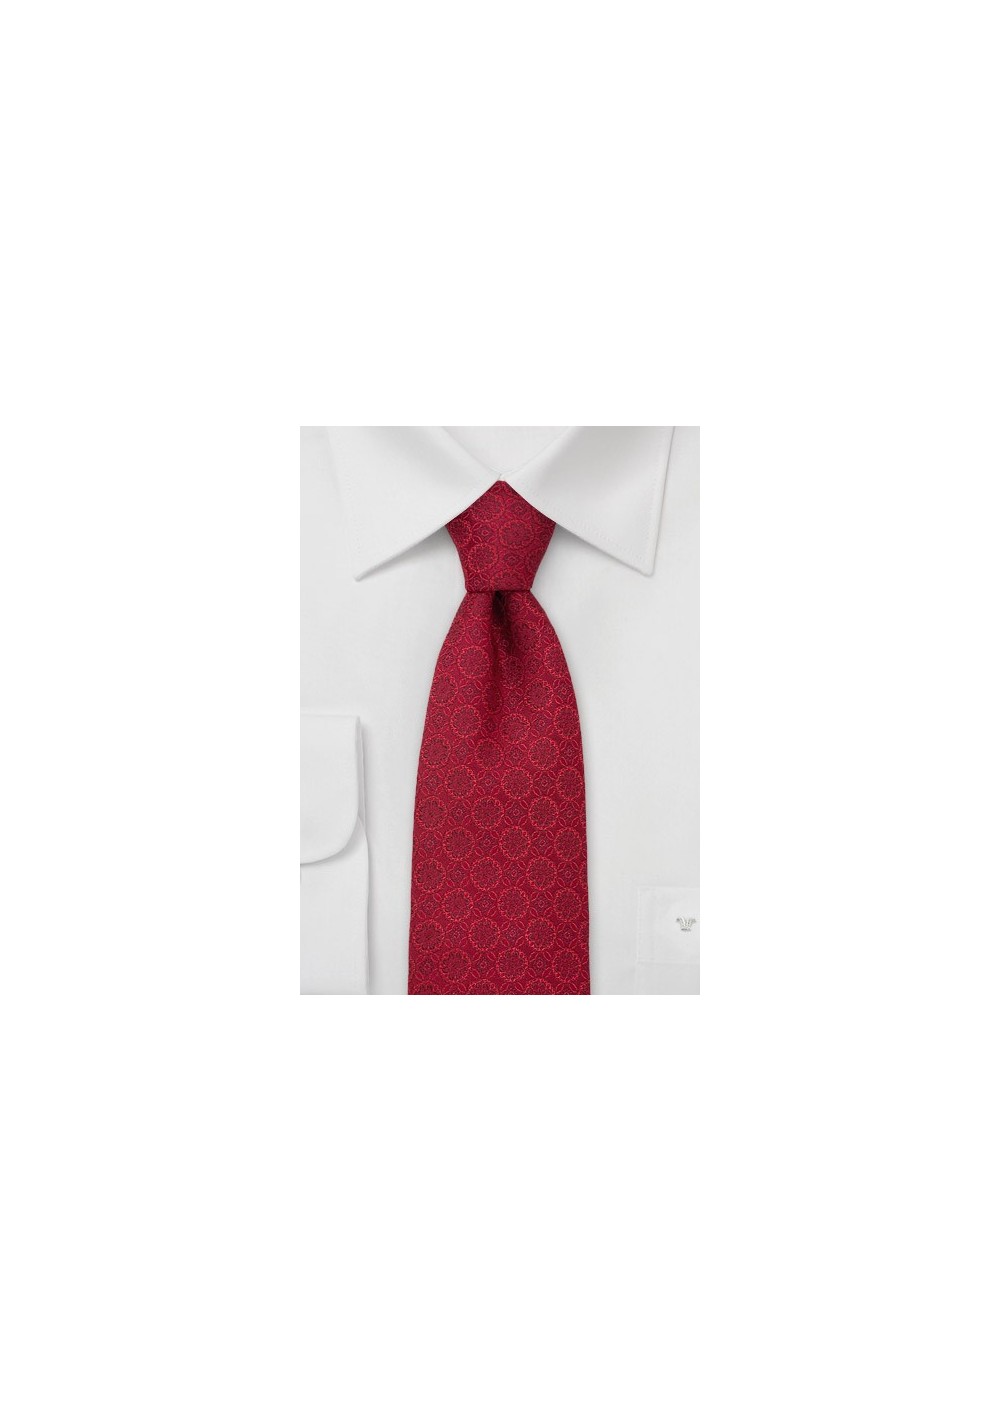 Designer Necktie by Chevalier in Venetian-Red